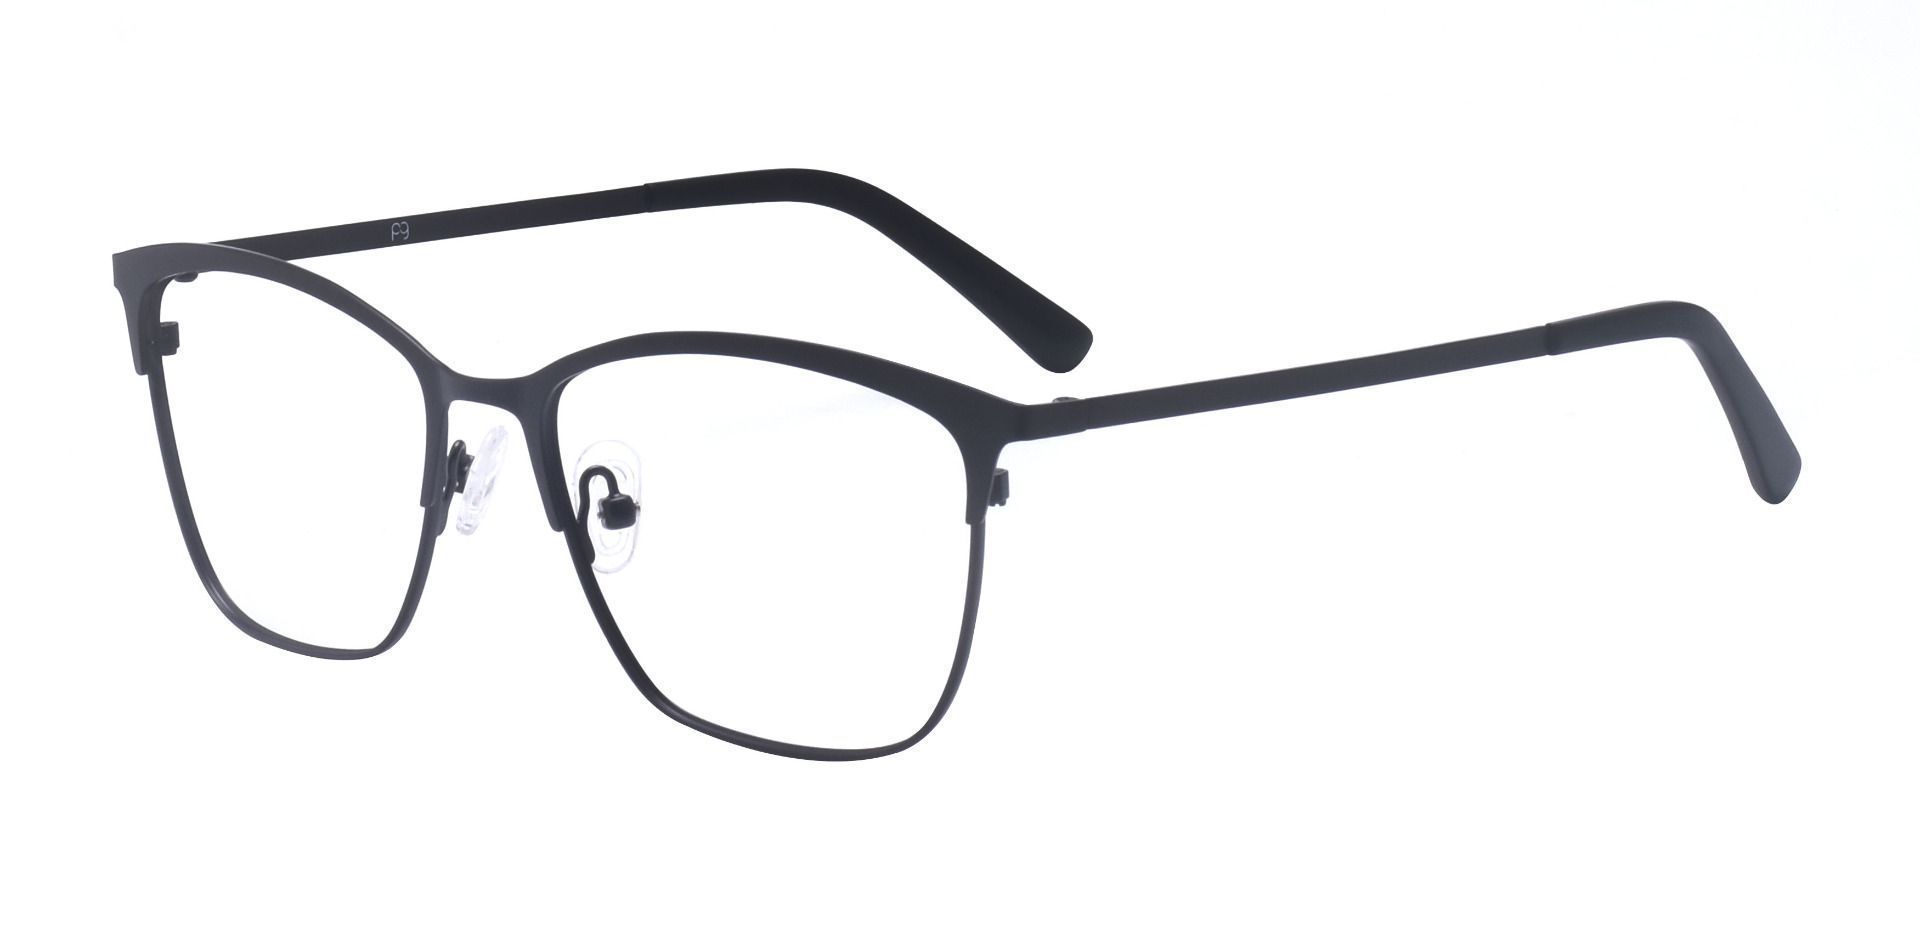 Simpson Classic Square Prescription Glasses Black Men S Eyeglasses Payne Glasses